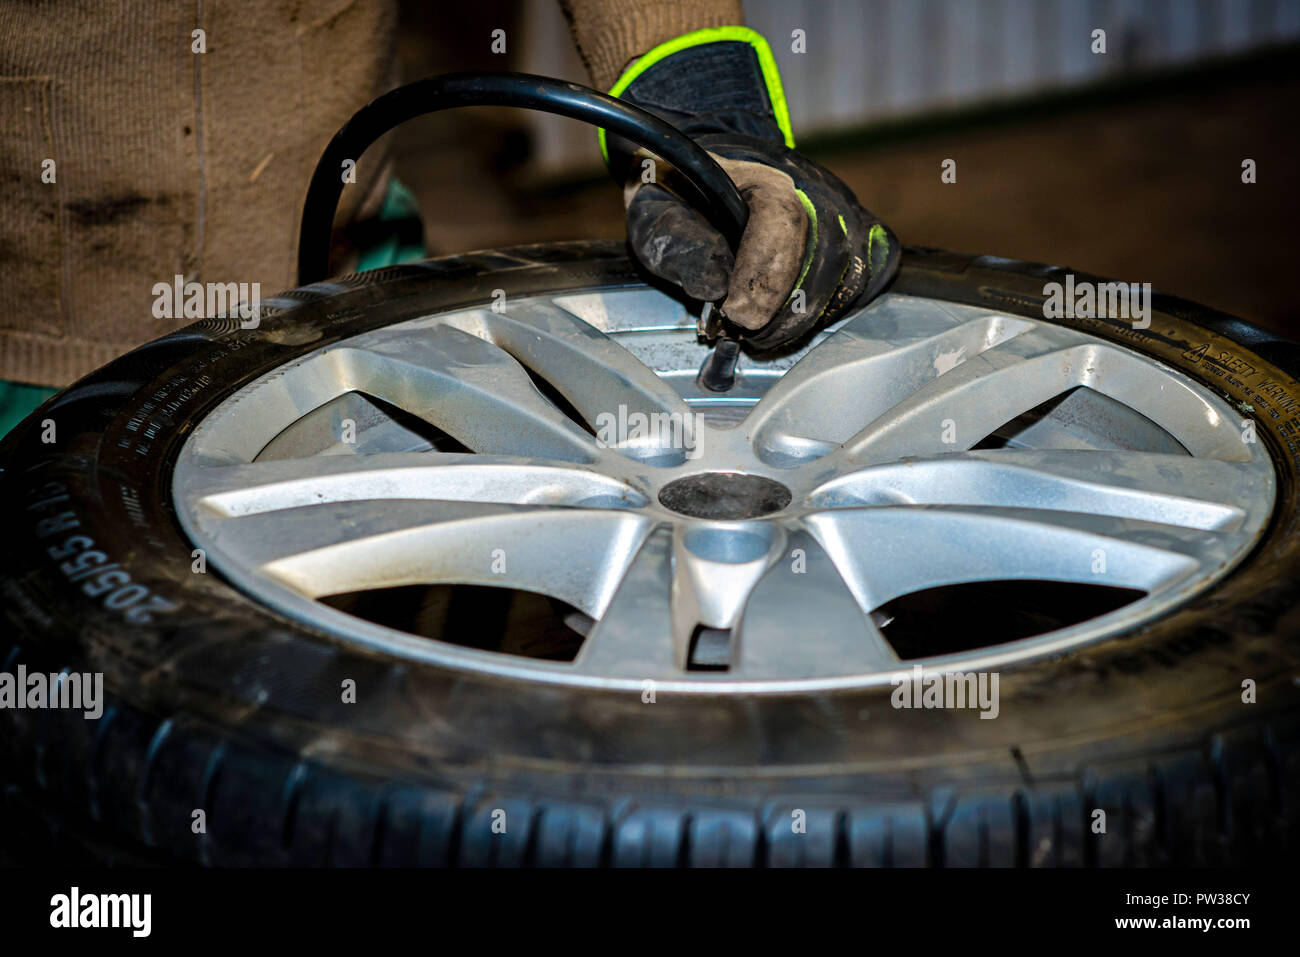 Seasonal tyre replacement. Seasonal tyre replacement. Auto mechanic changing car wheel. Stock Photo